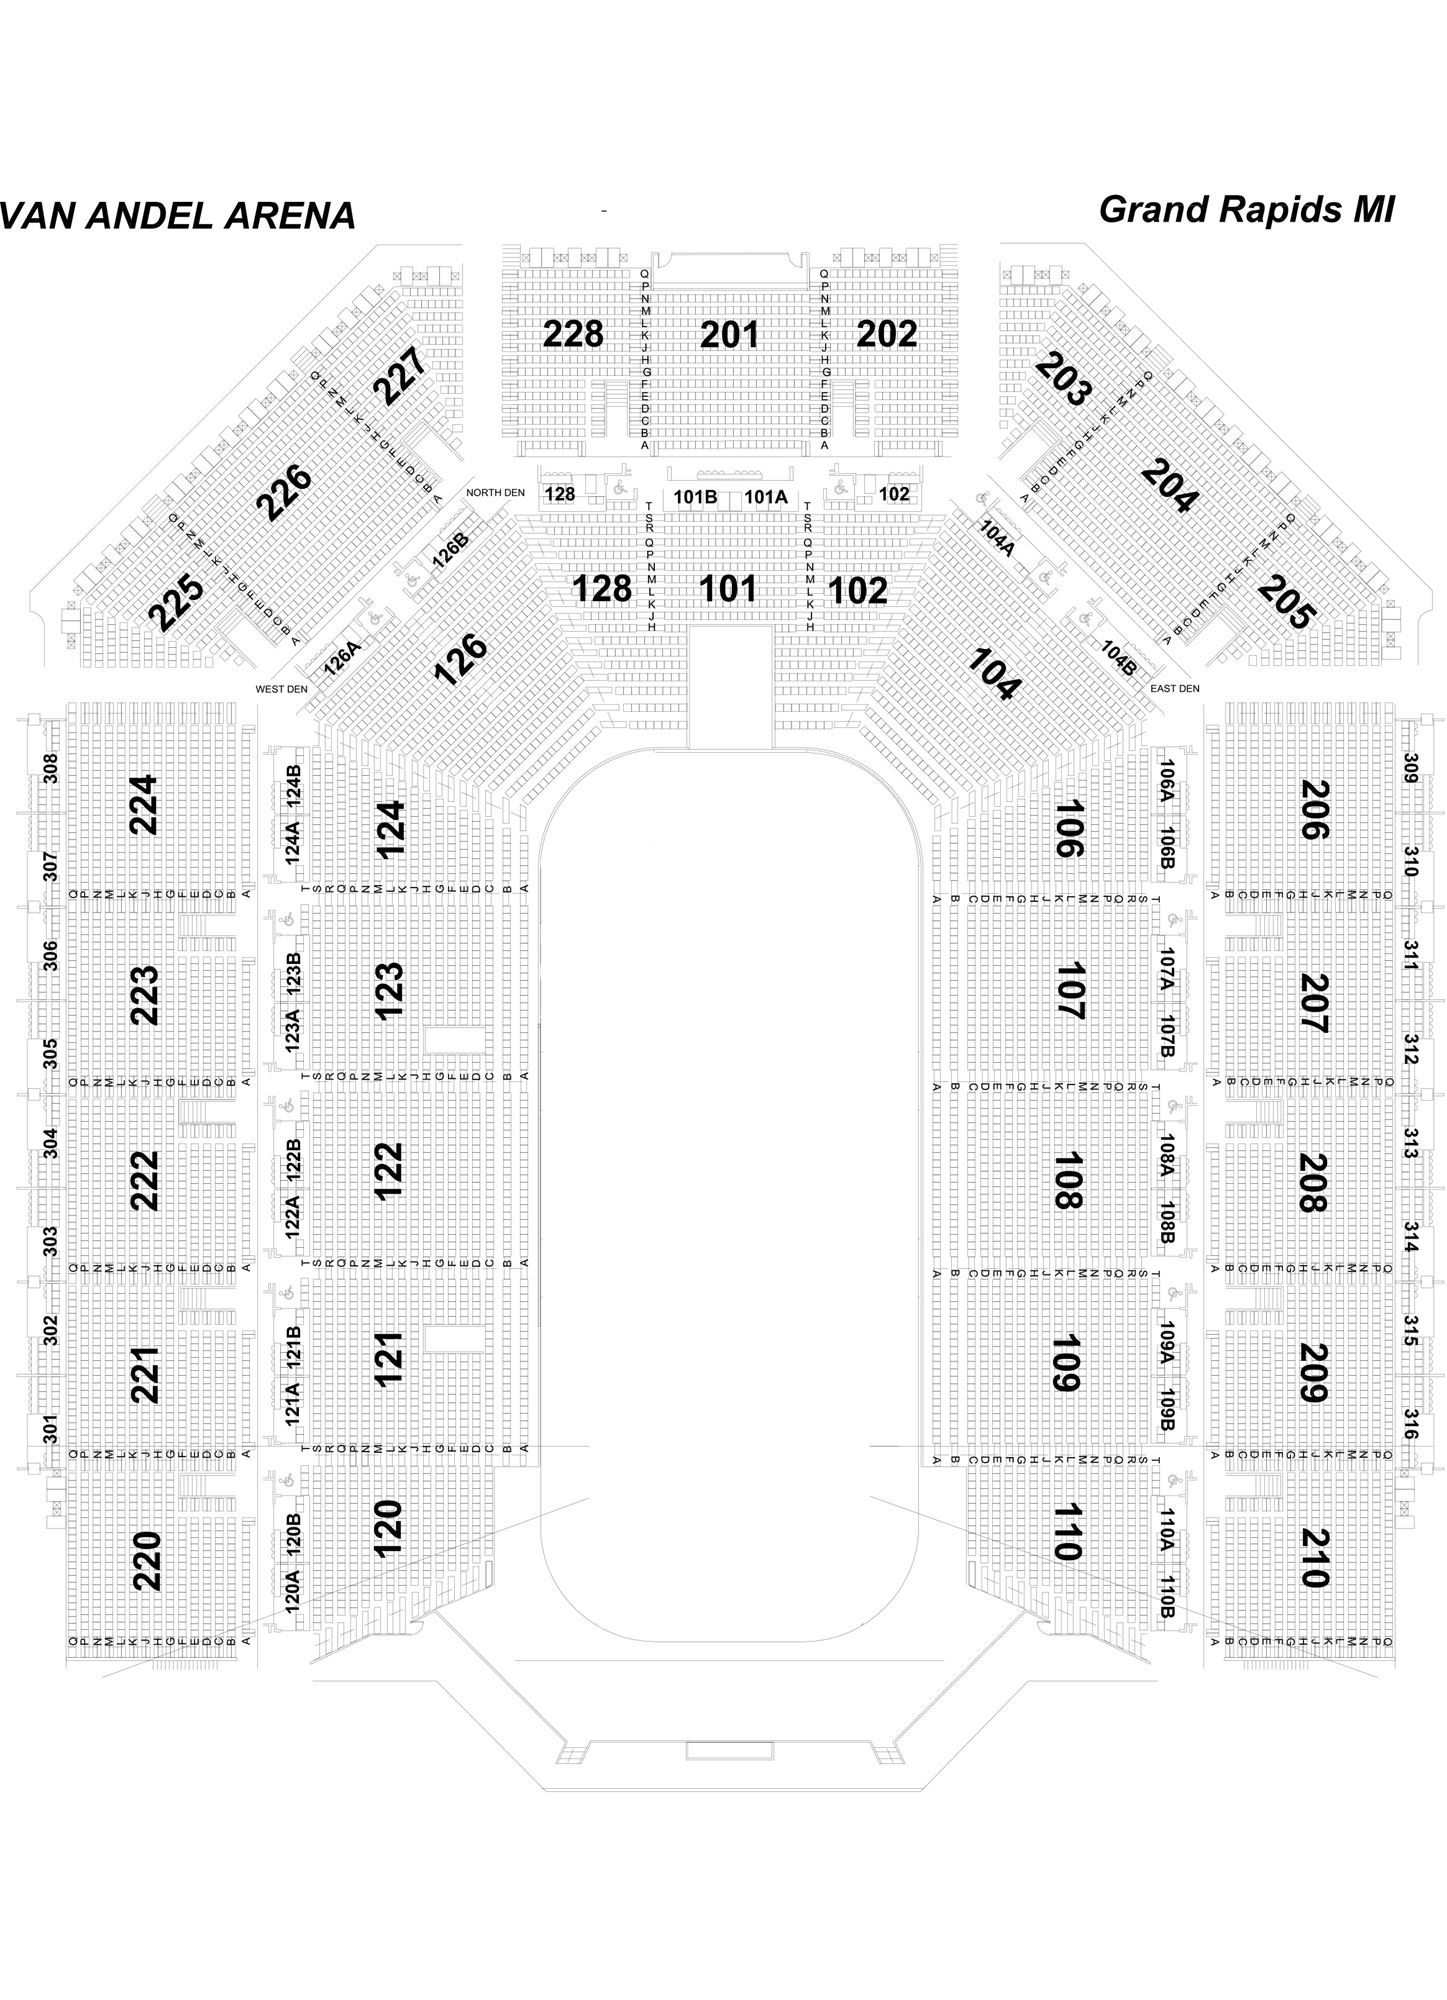 Seating Charts Van Andel Arena